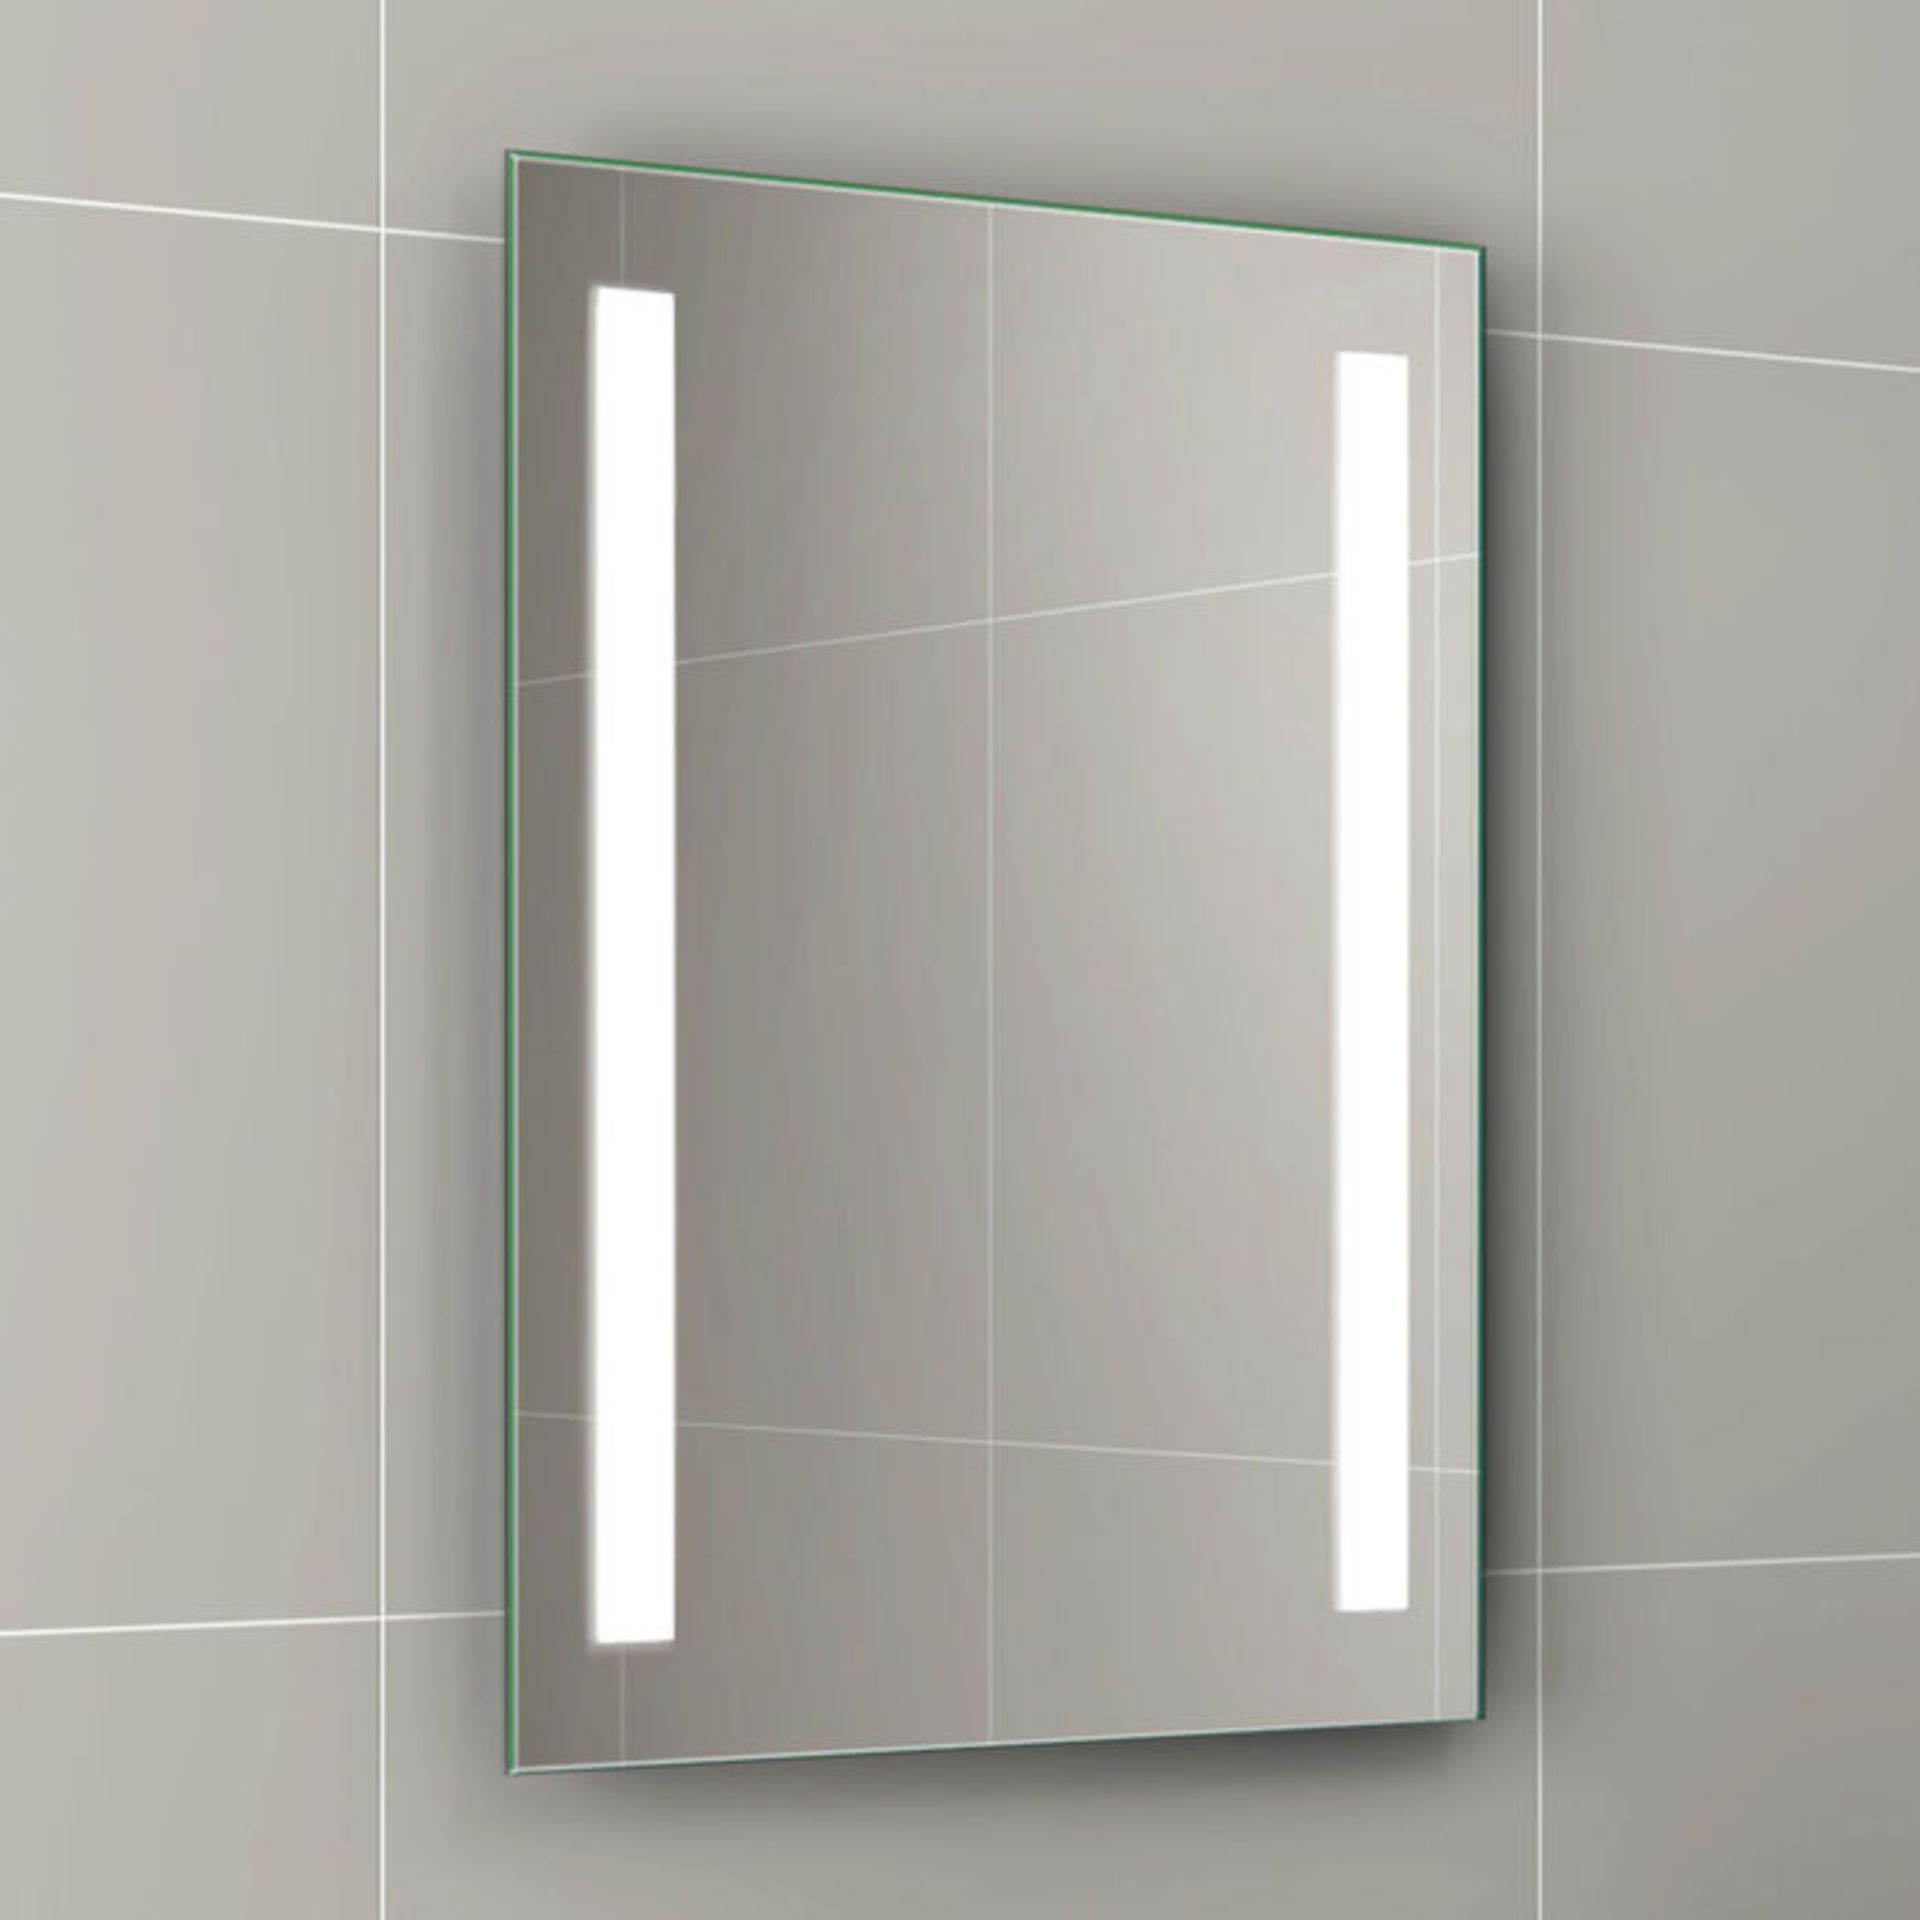 New 600x450mm Omega Illuminated Led Mirror. Ml2108. Energy Saving Controlled On / Off Switch ... - Image 2 of 2